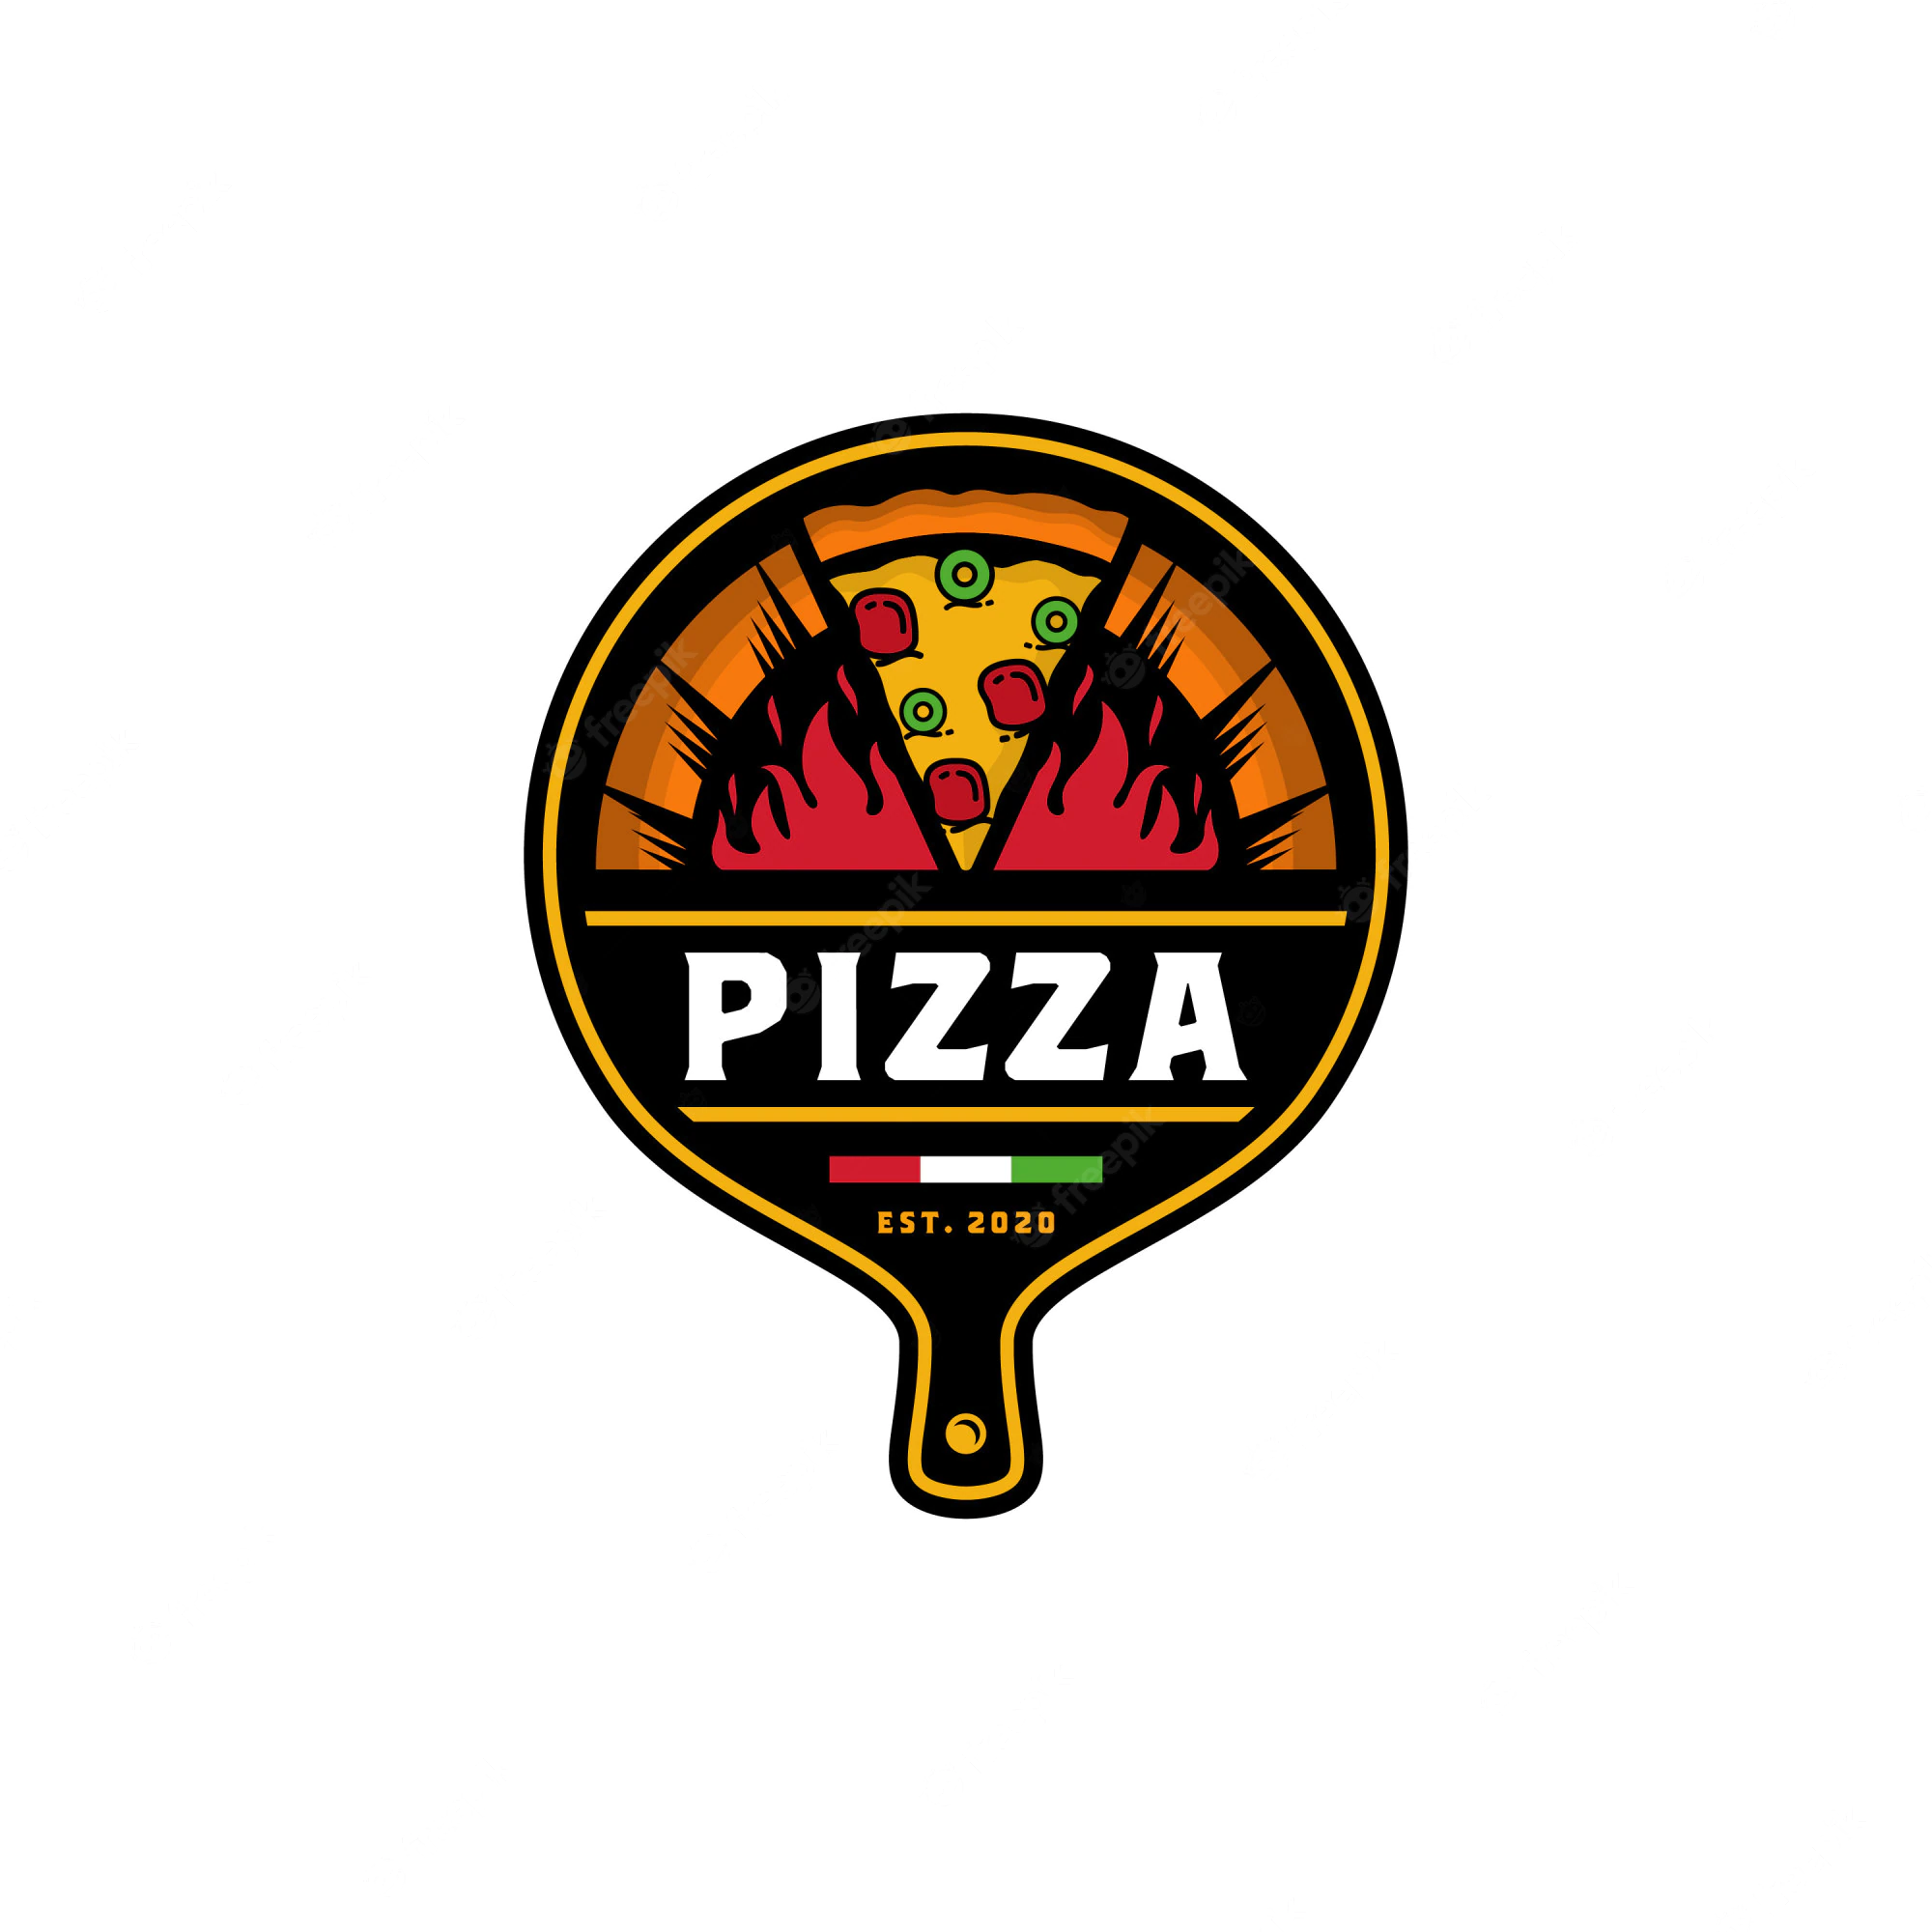 Pizza restaurant logo